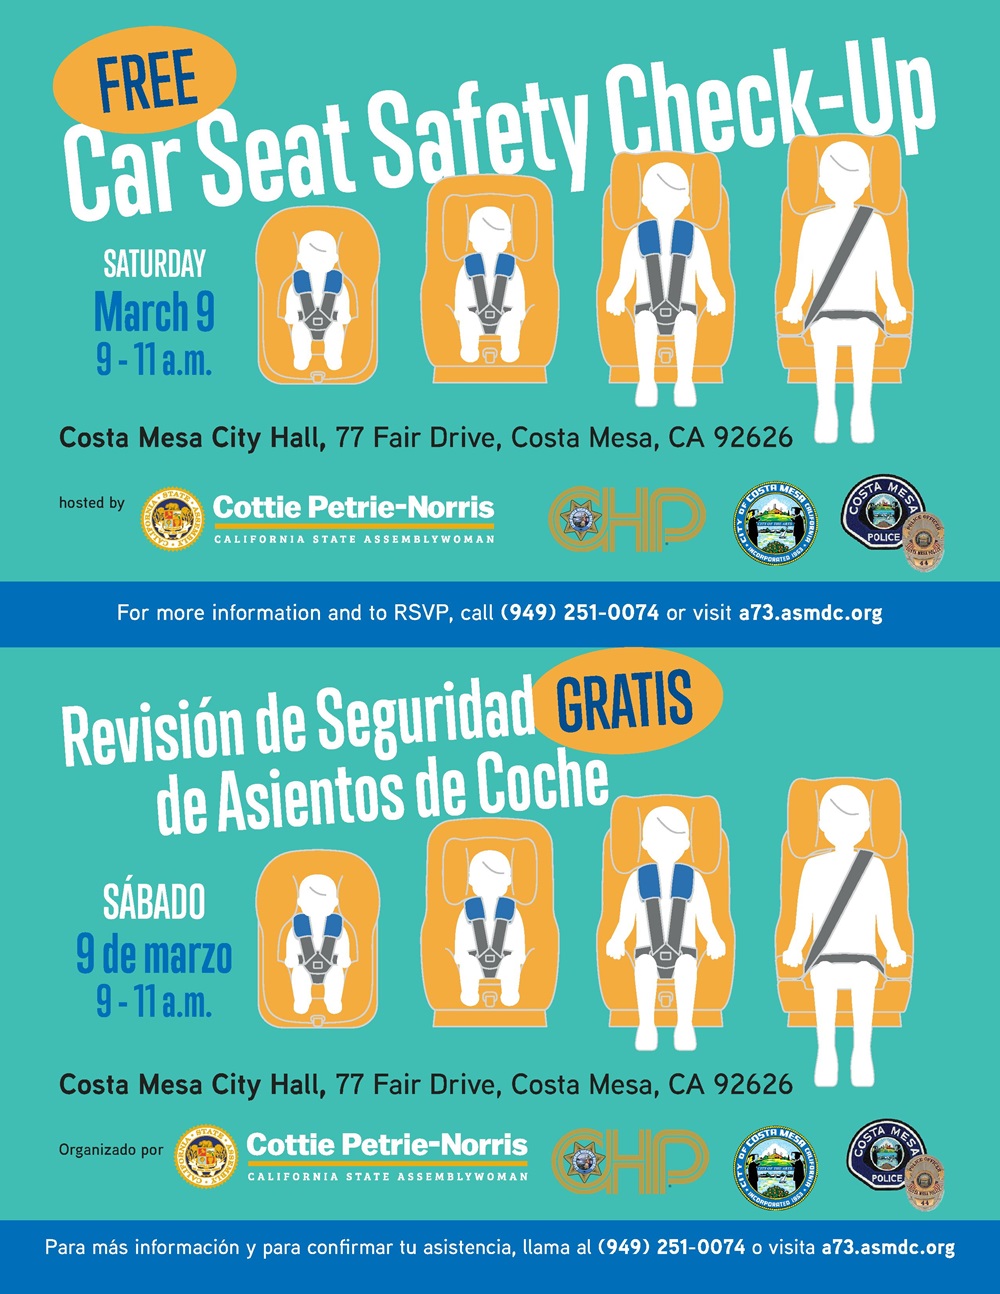 CPN_Car Safety Event_CostaMesa_Flyer